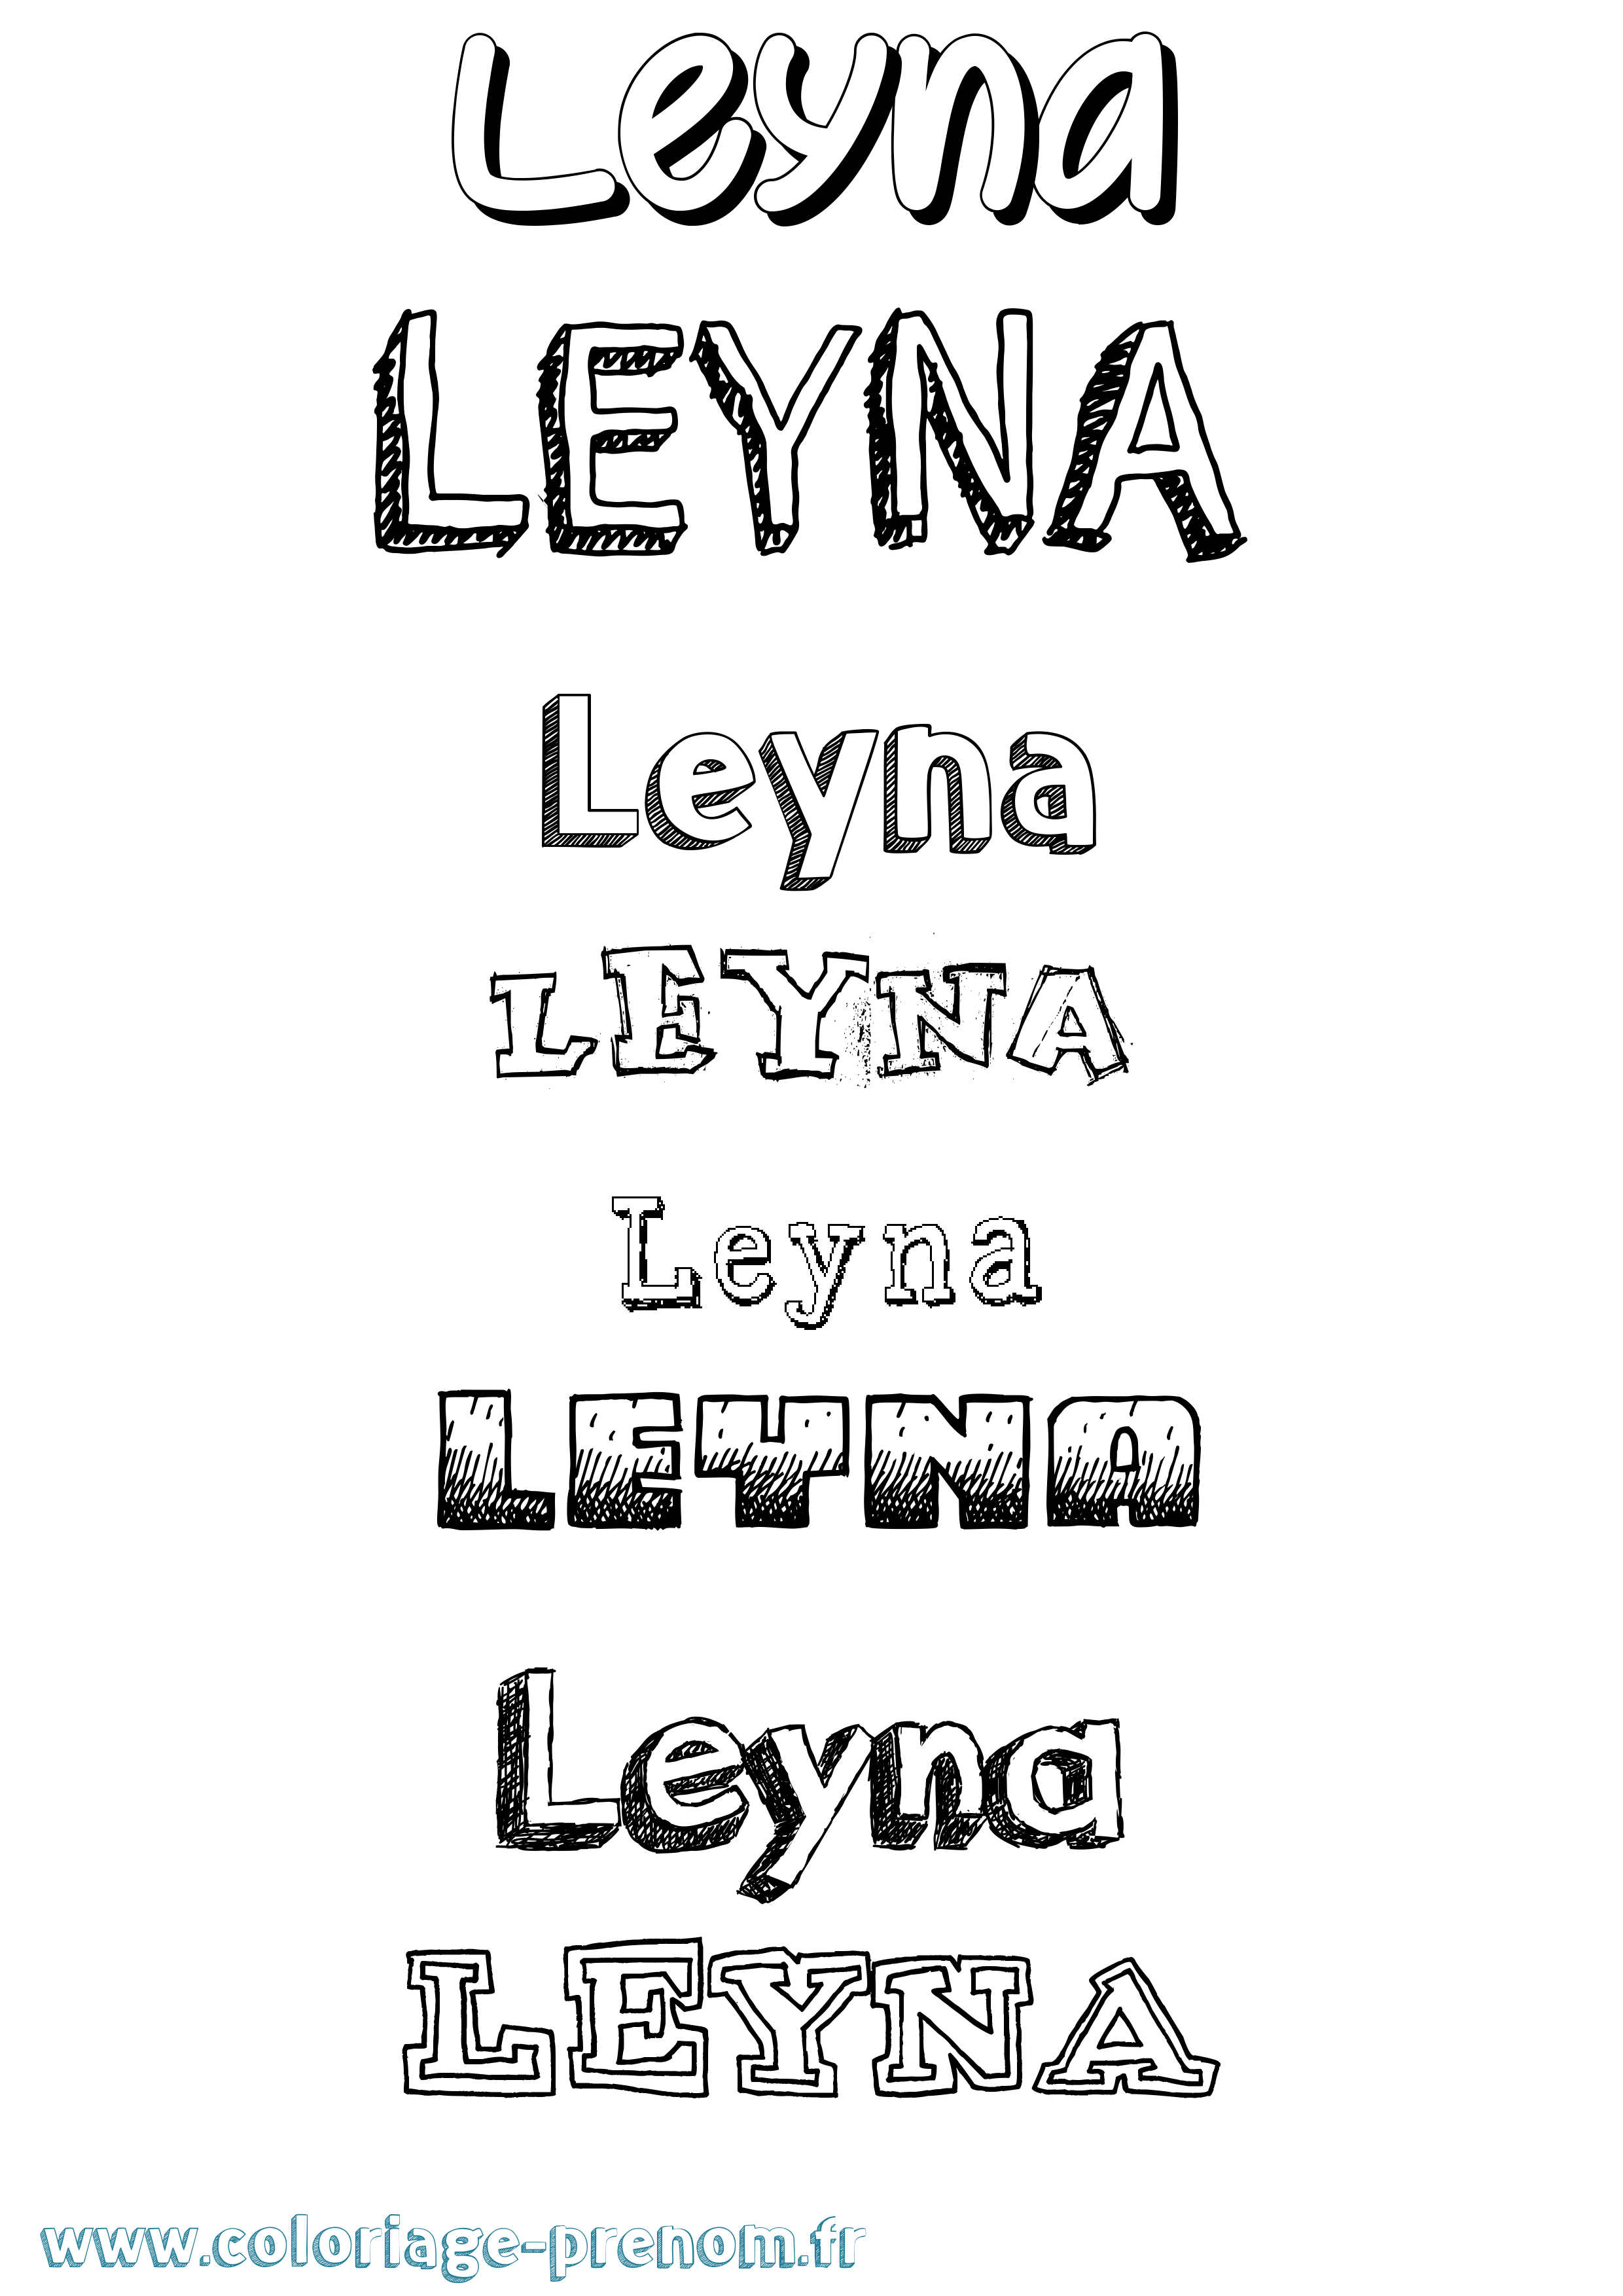 Coloriage prénom Leyna